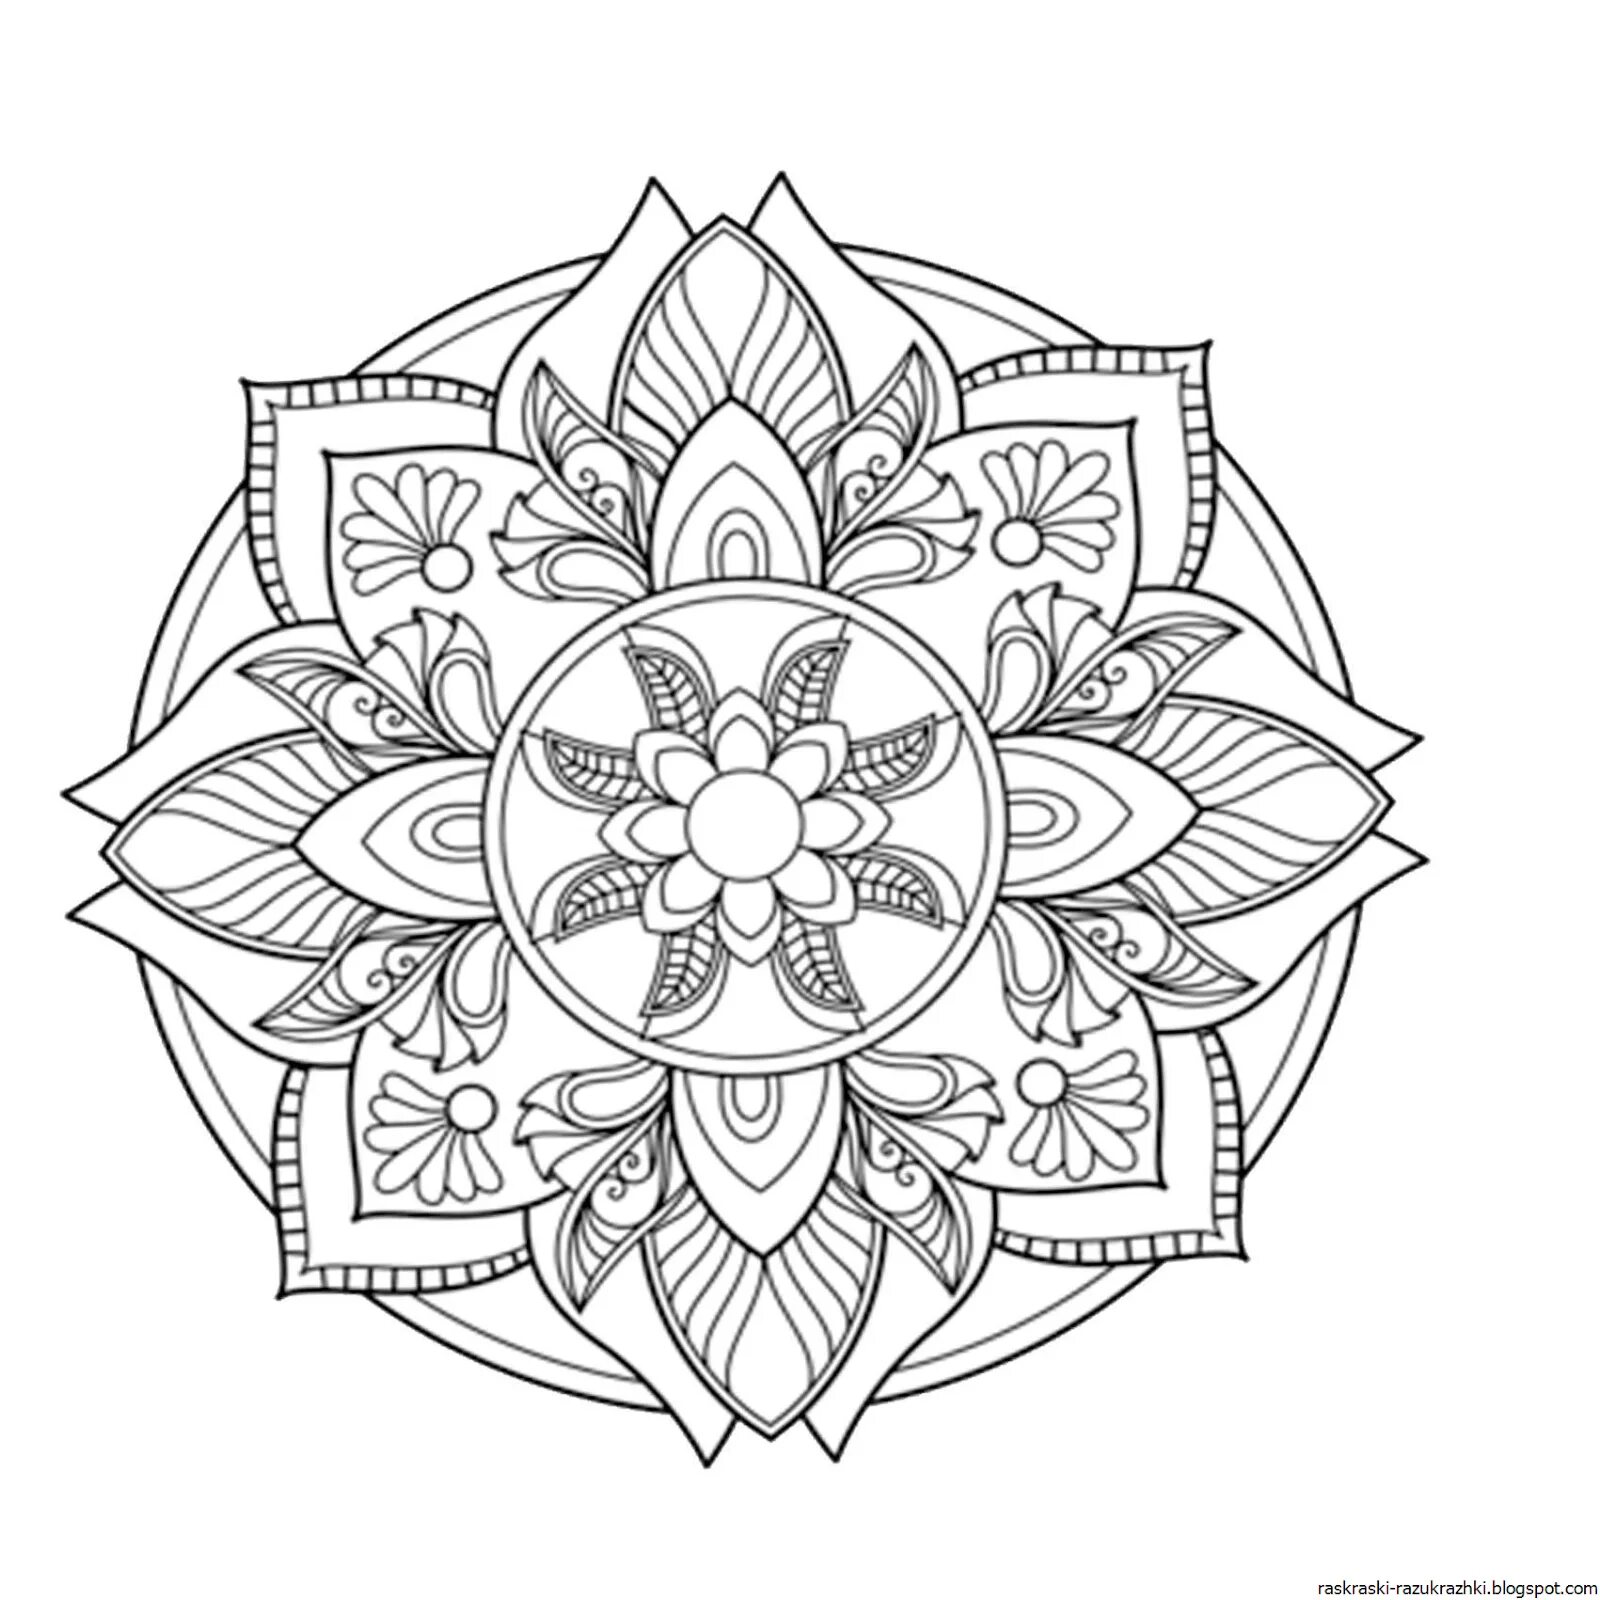 Intricate mandala coloring page - charm